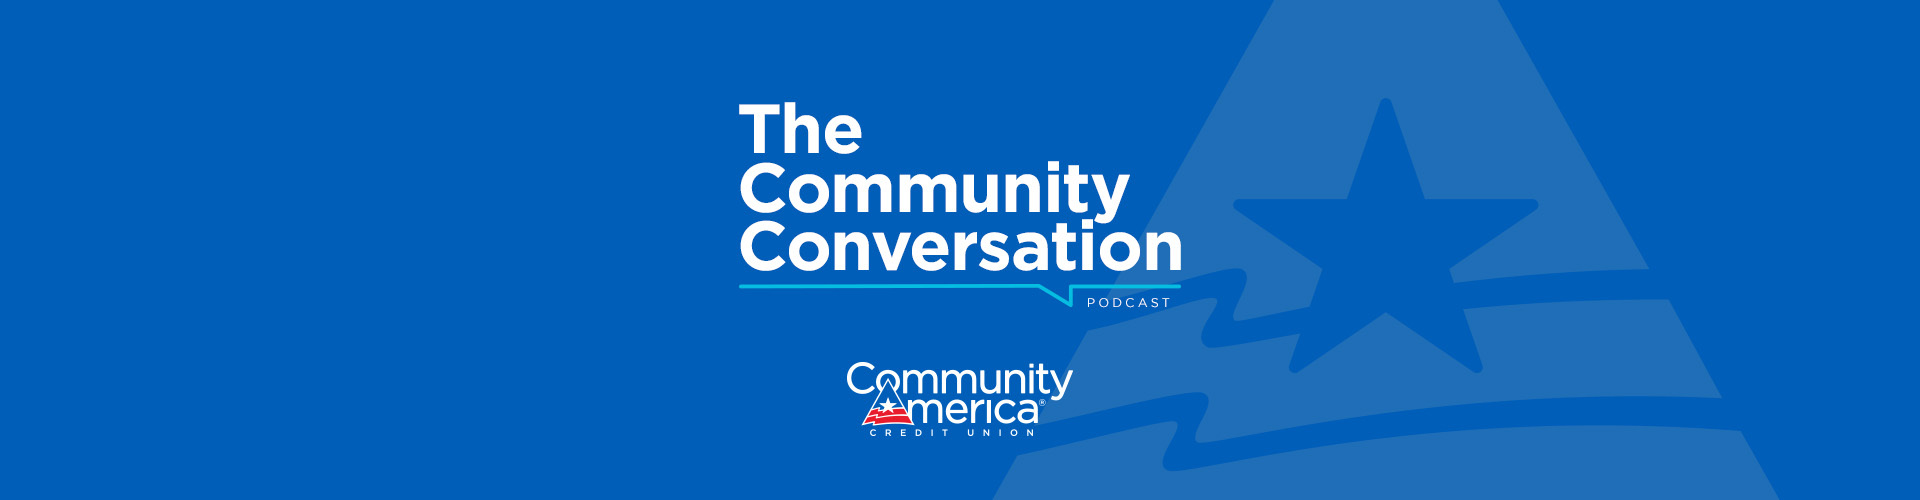 The Community Conversation by CommunityAmerica